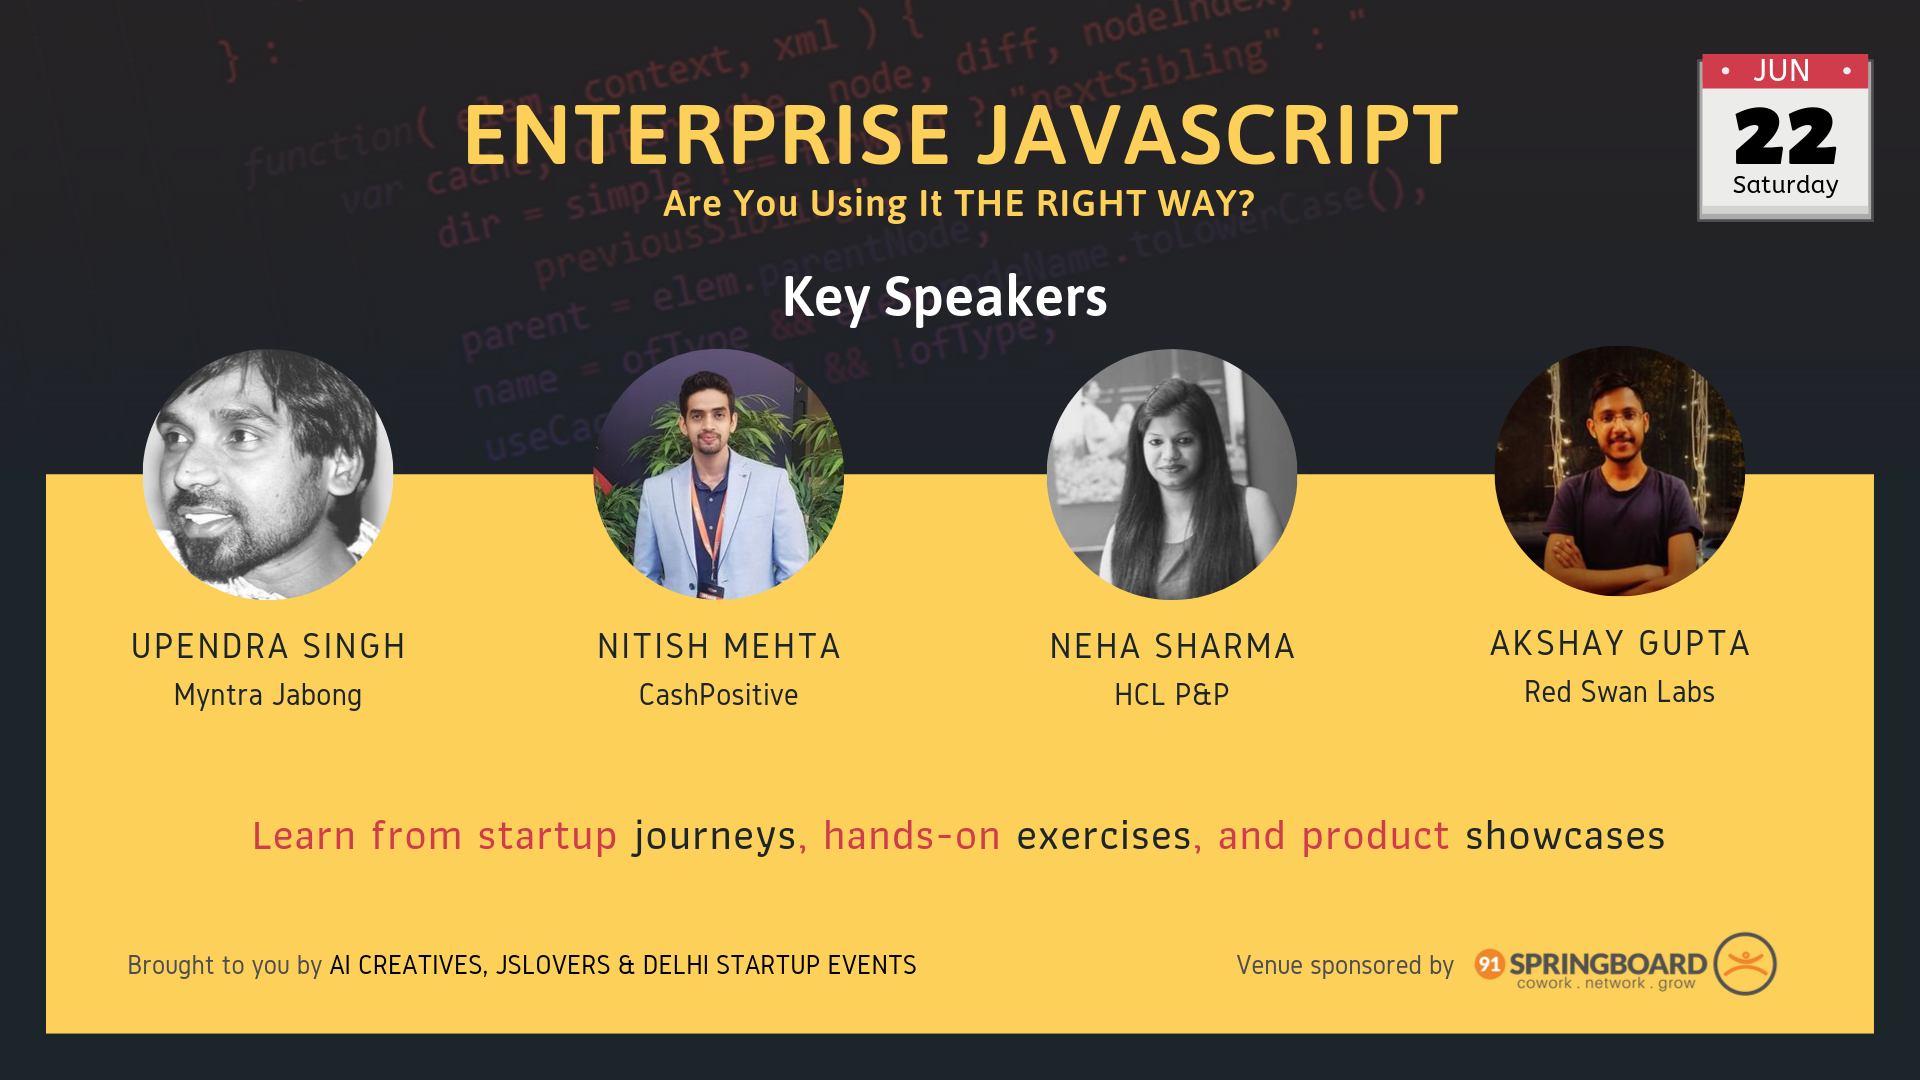 Enterprise JavaScript Version 1 poster